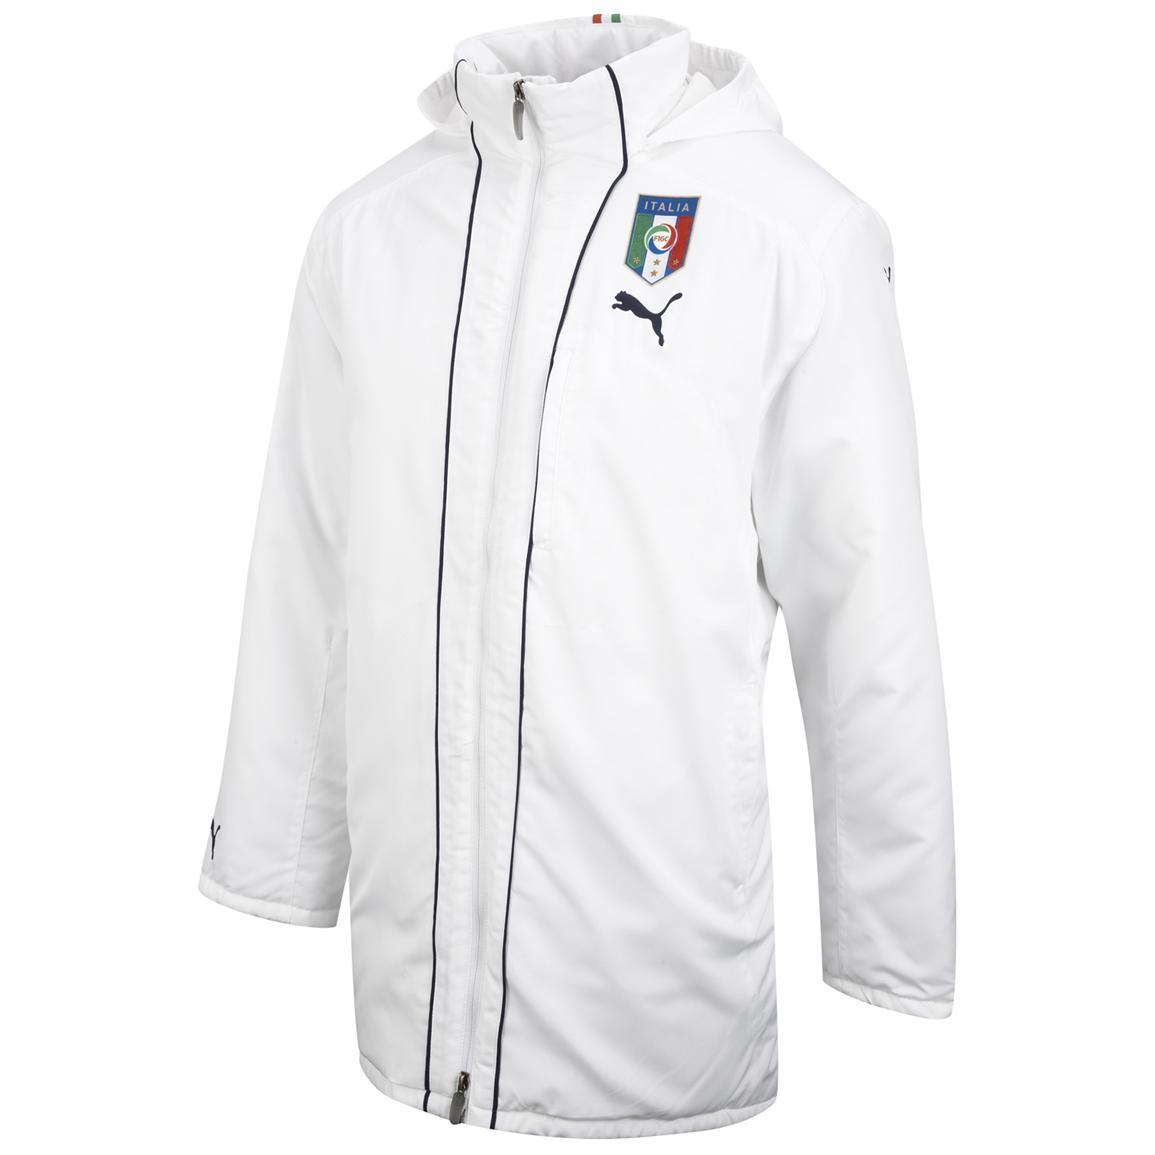 puma italia jacket white